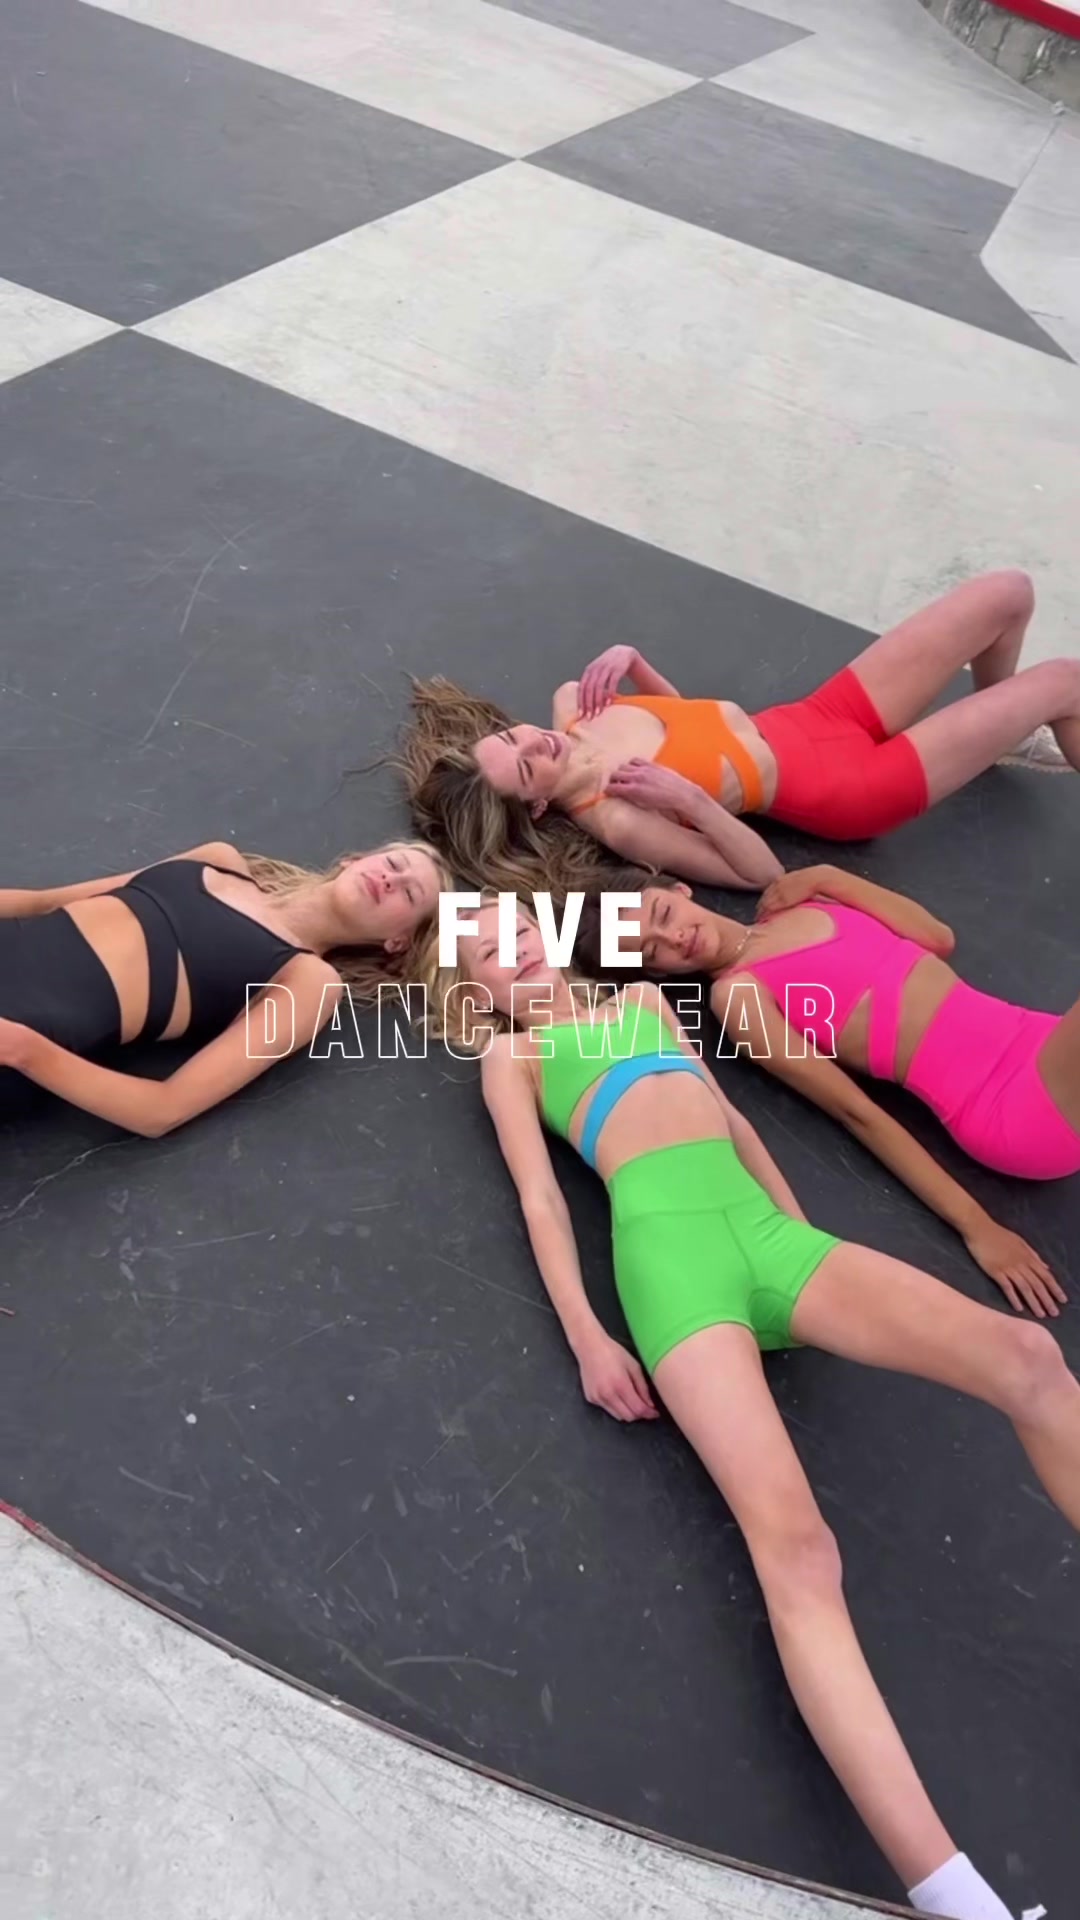 @Five Dancewear